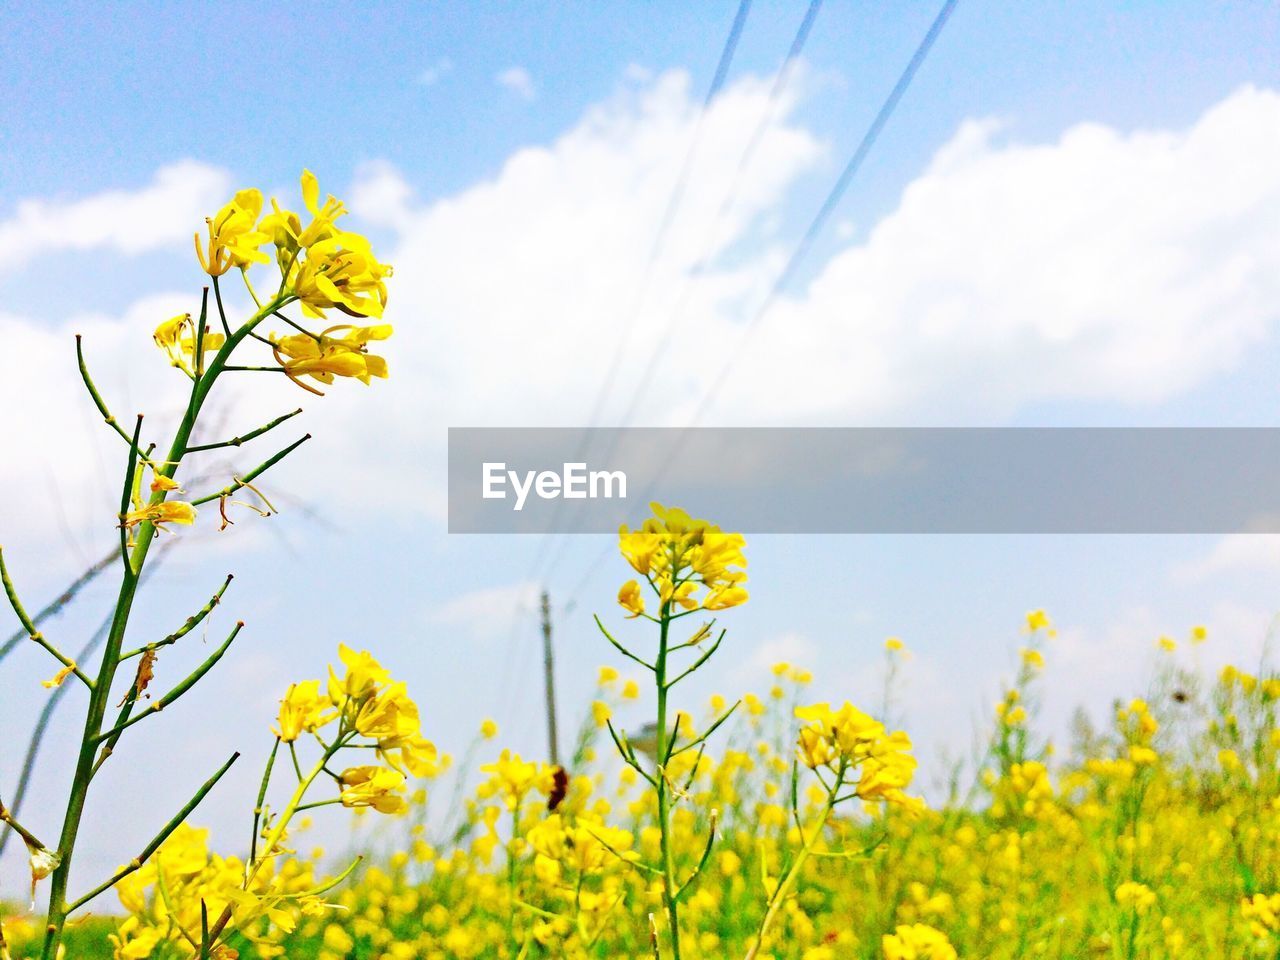 Yellow flowers blooming in field against sky